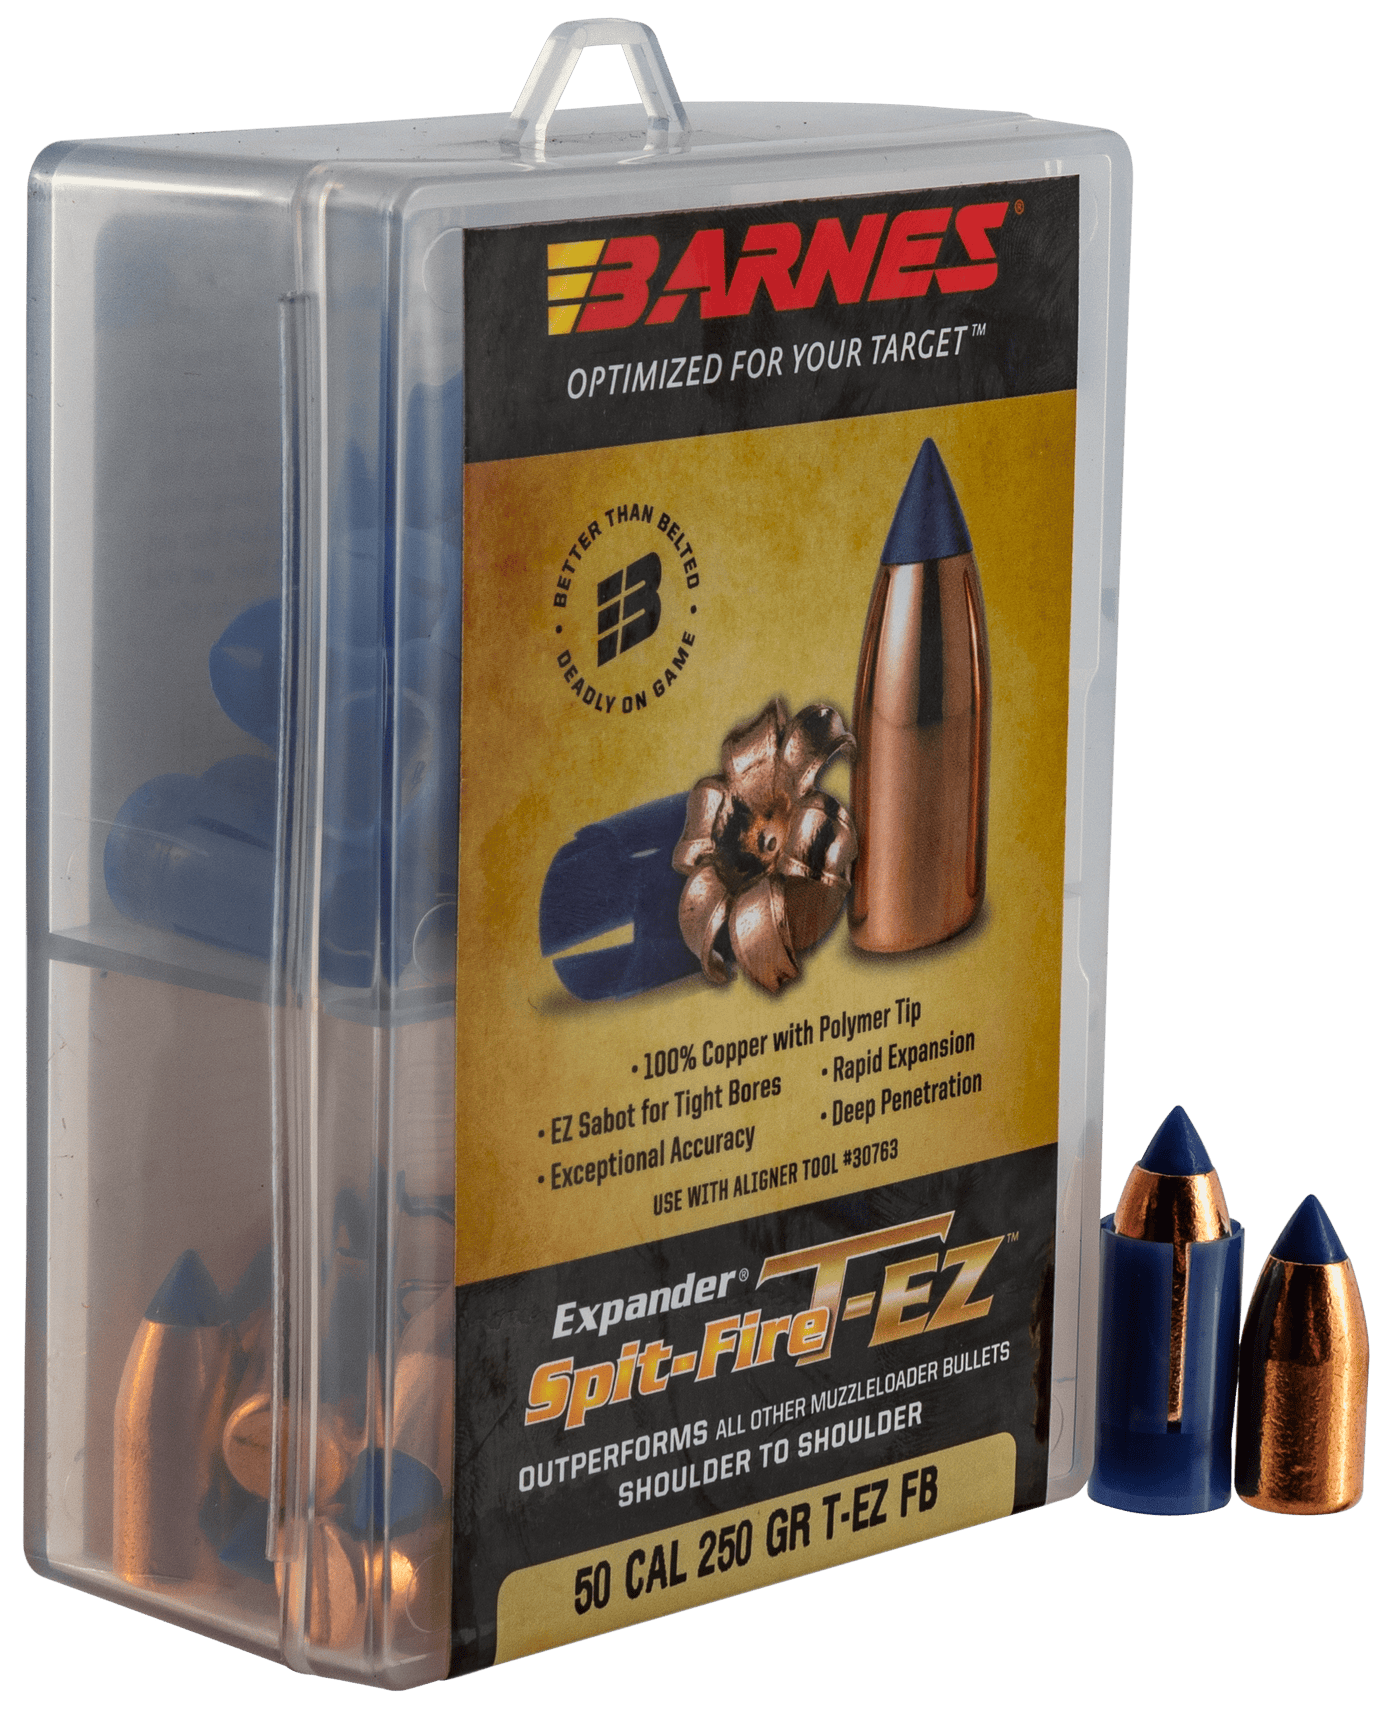 Barnes Bullets Barnes Bullets Spit-fire T-ez, Brns 30601 .451 50c 250 T-ez Fb     24 Muzzleloading